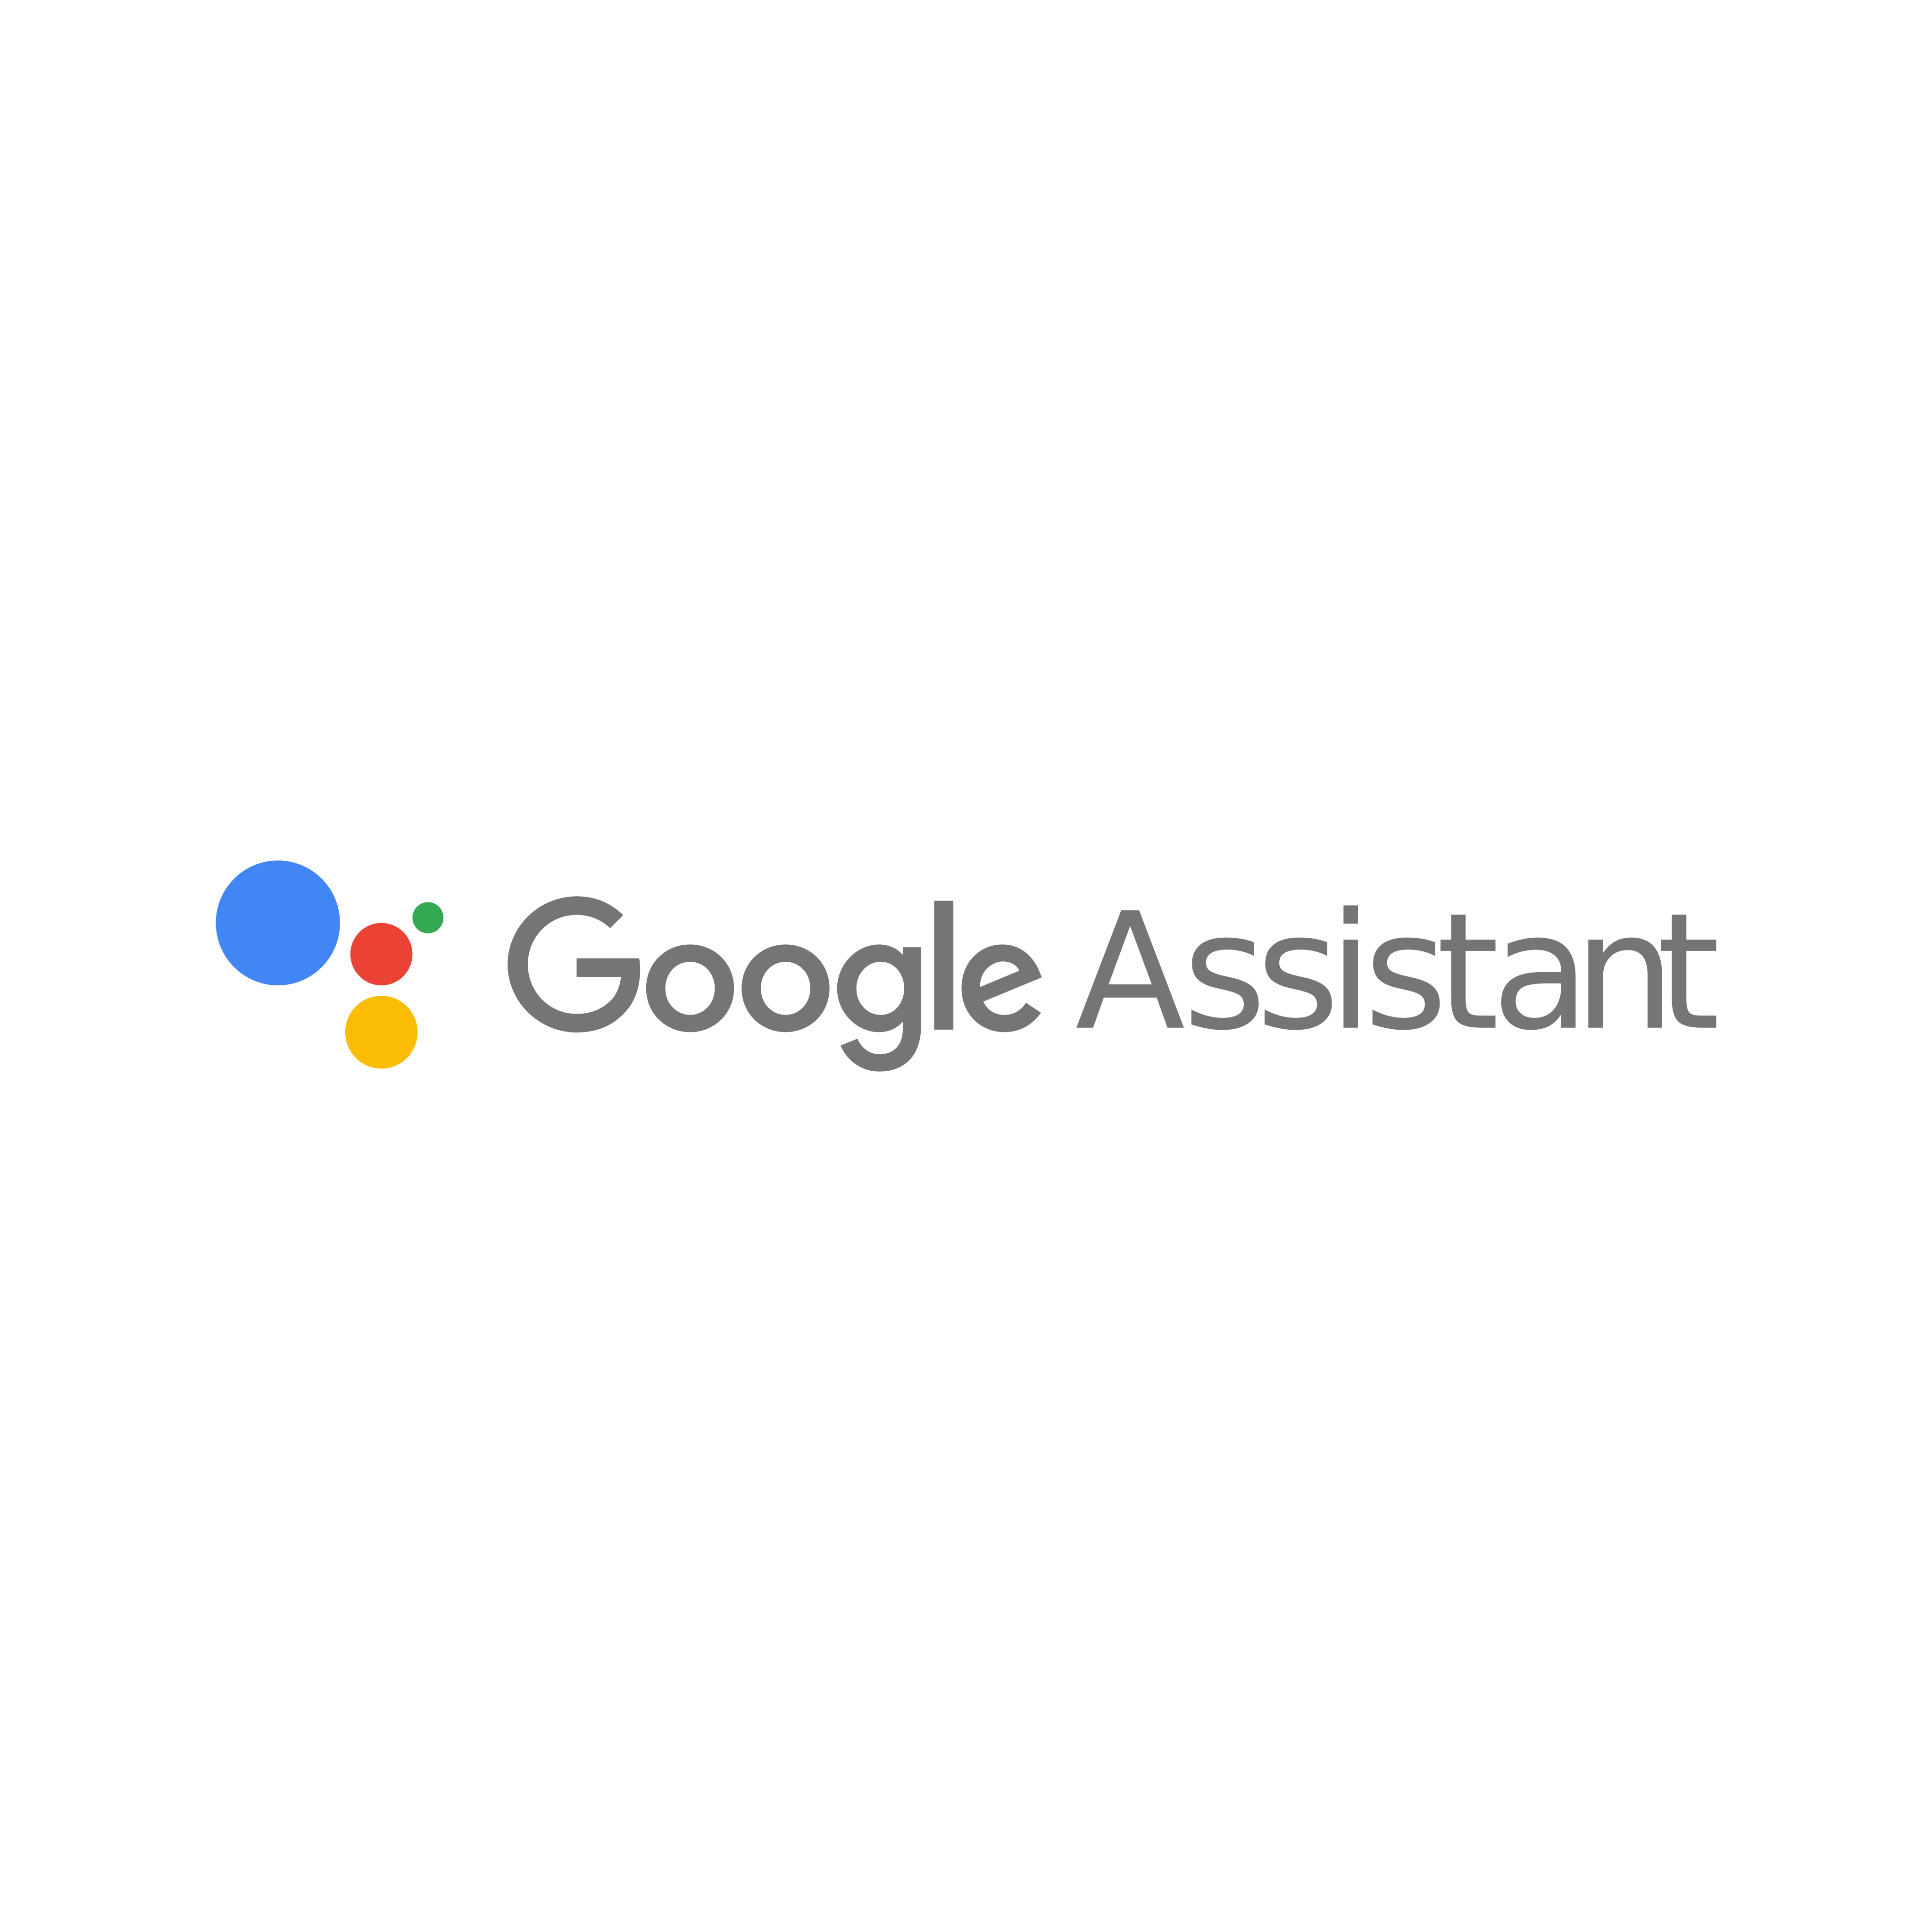 Google Assistant Logo PNG.